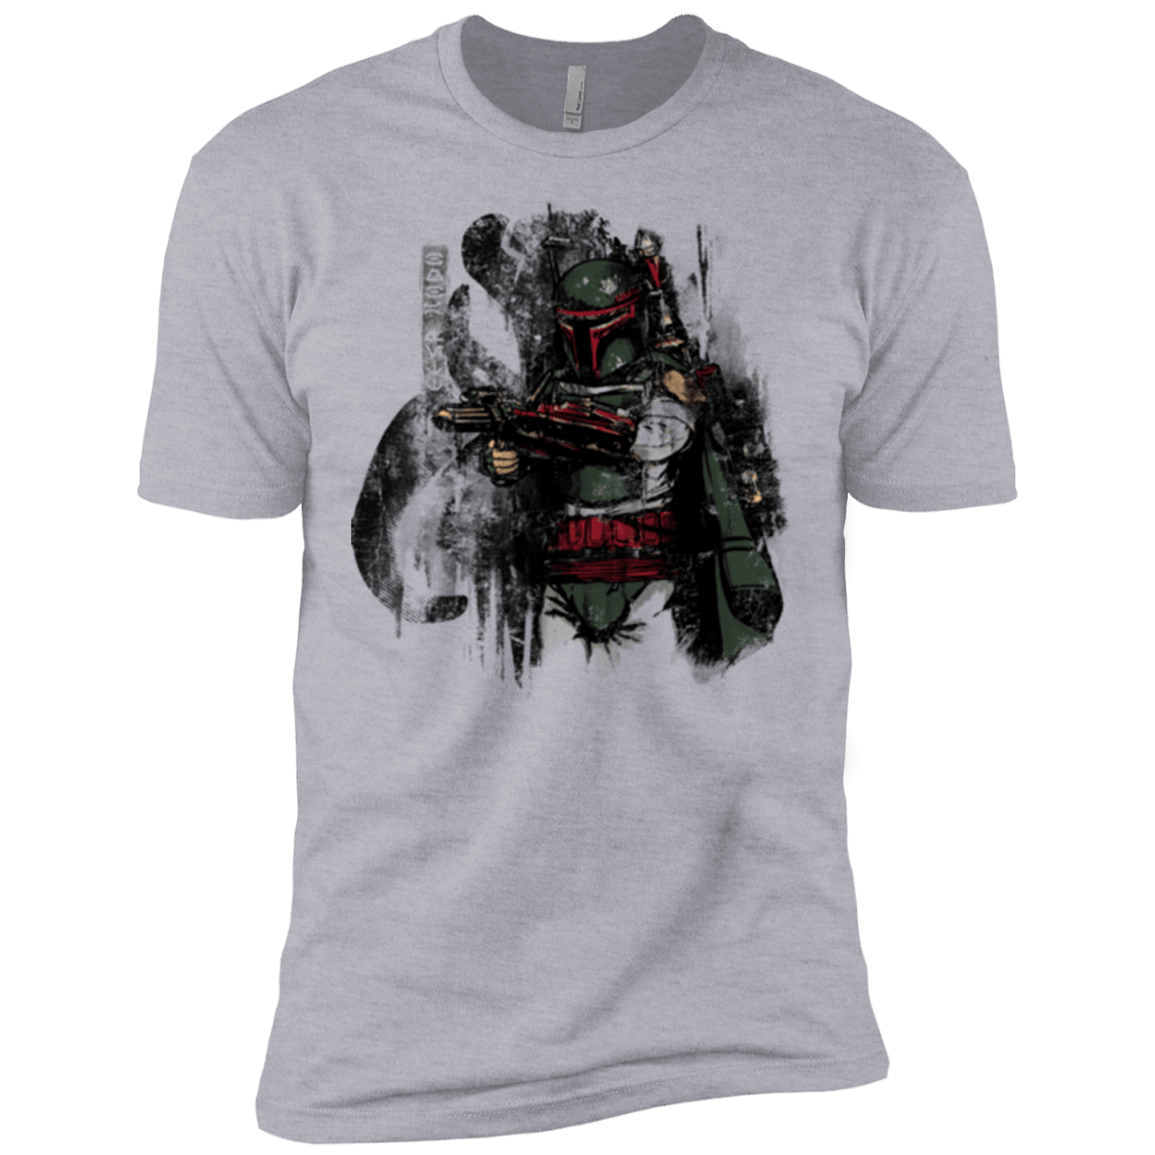 Hunter 2 Men's Premium T-Shirt